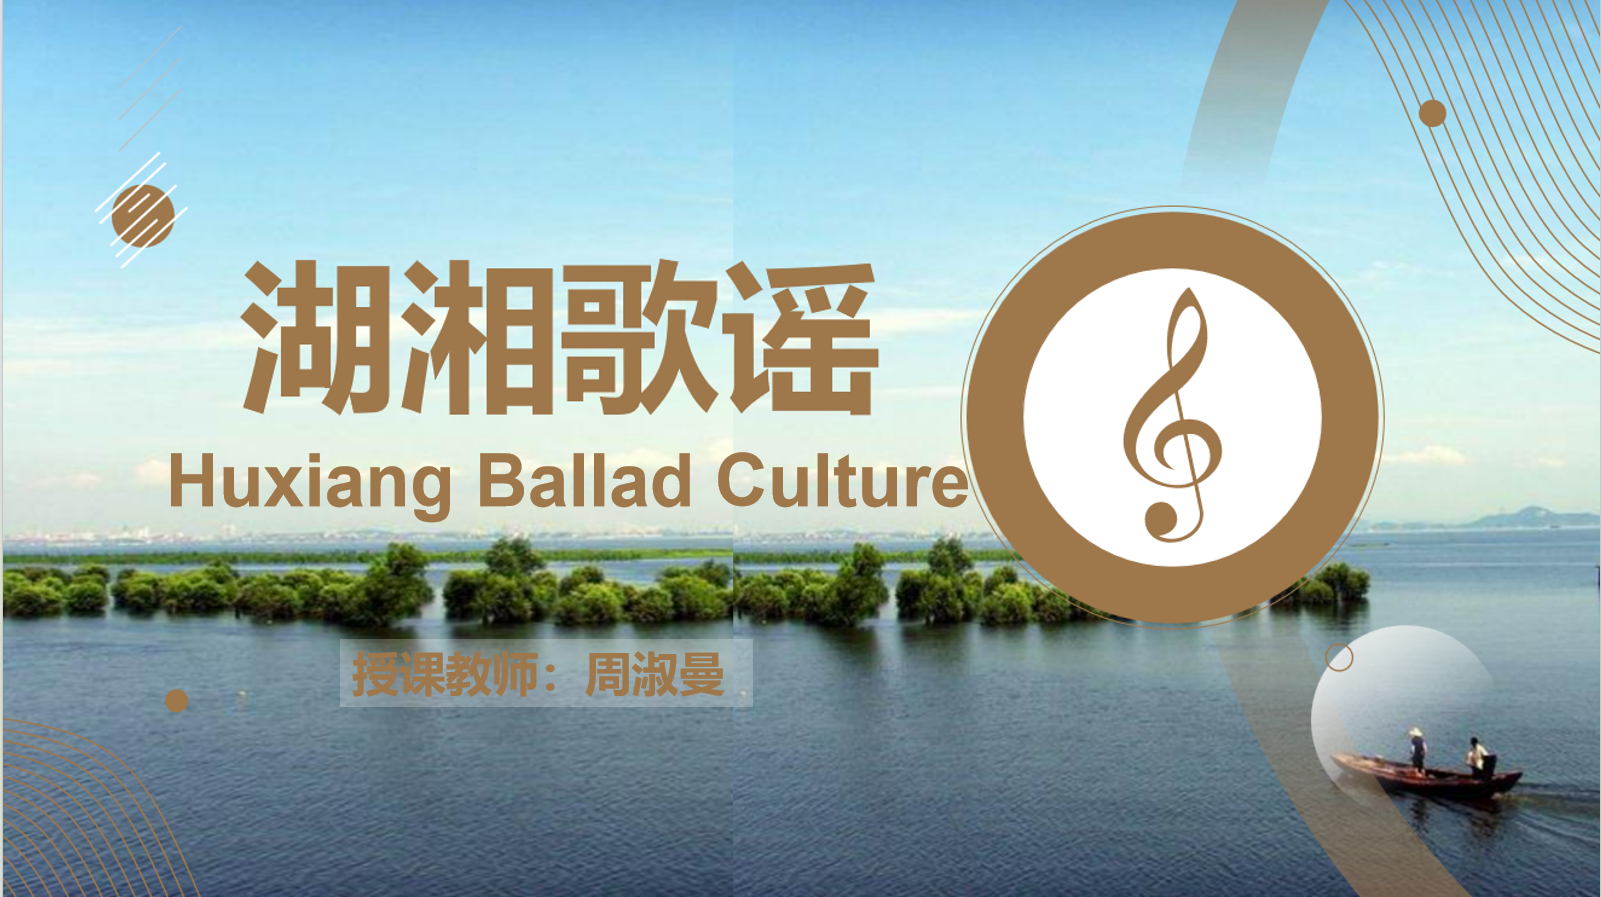 Huxiang Ballad Culture